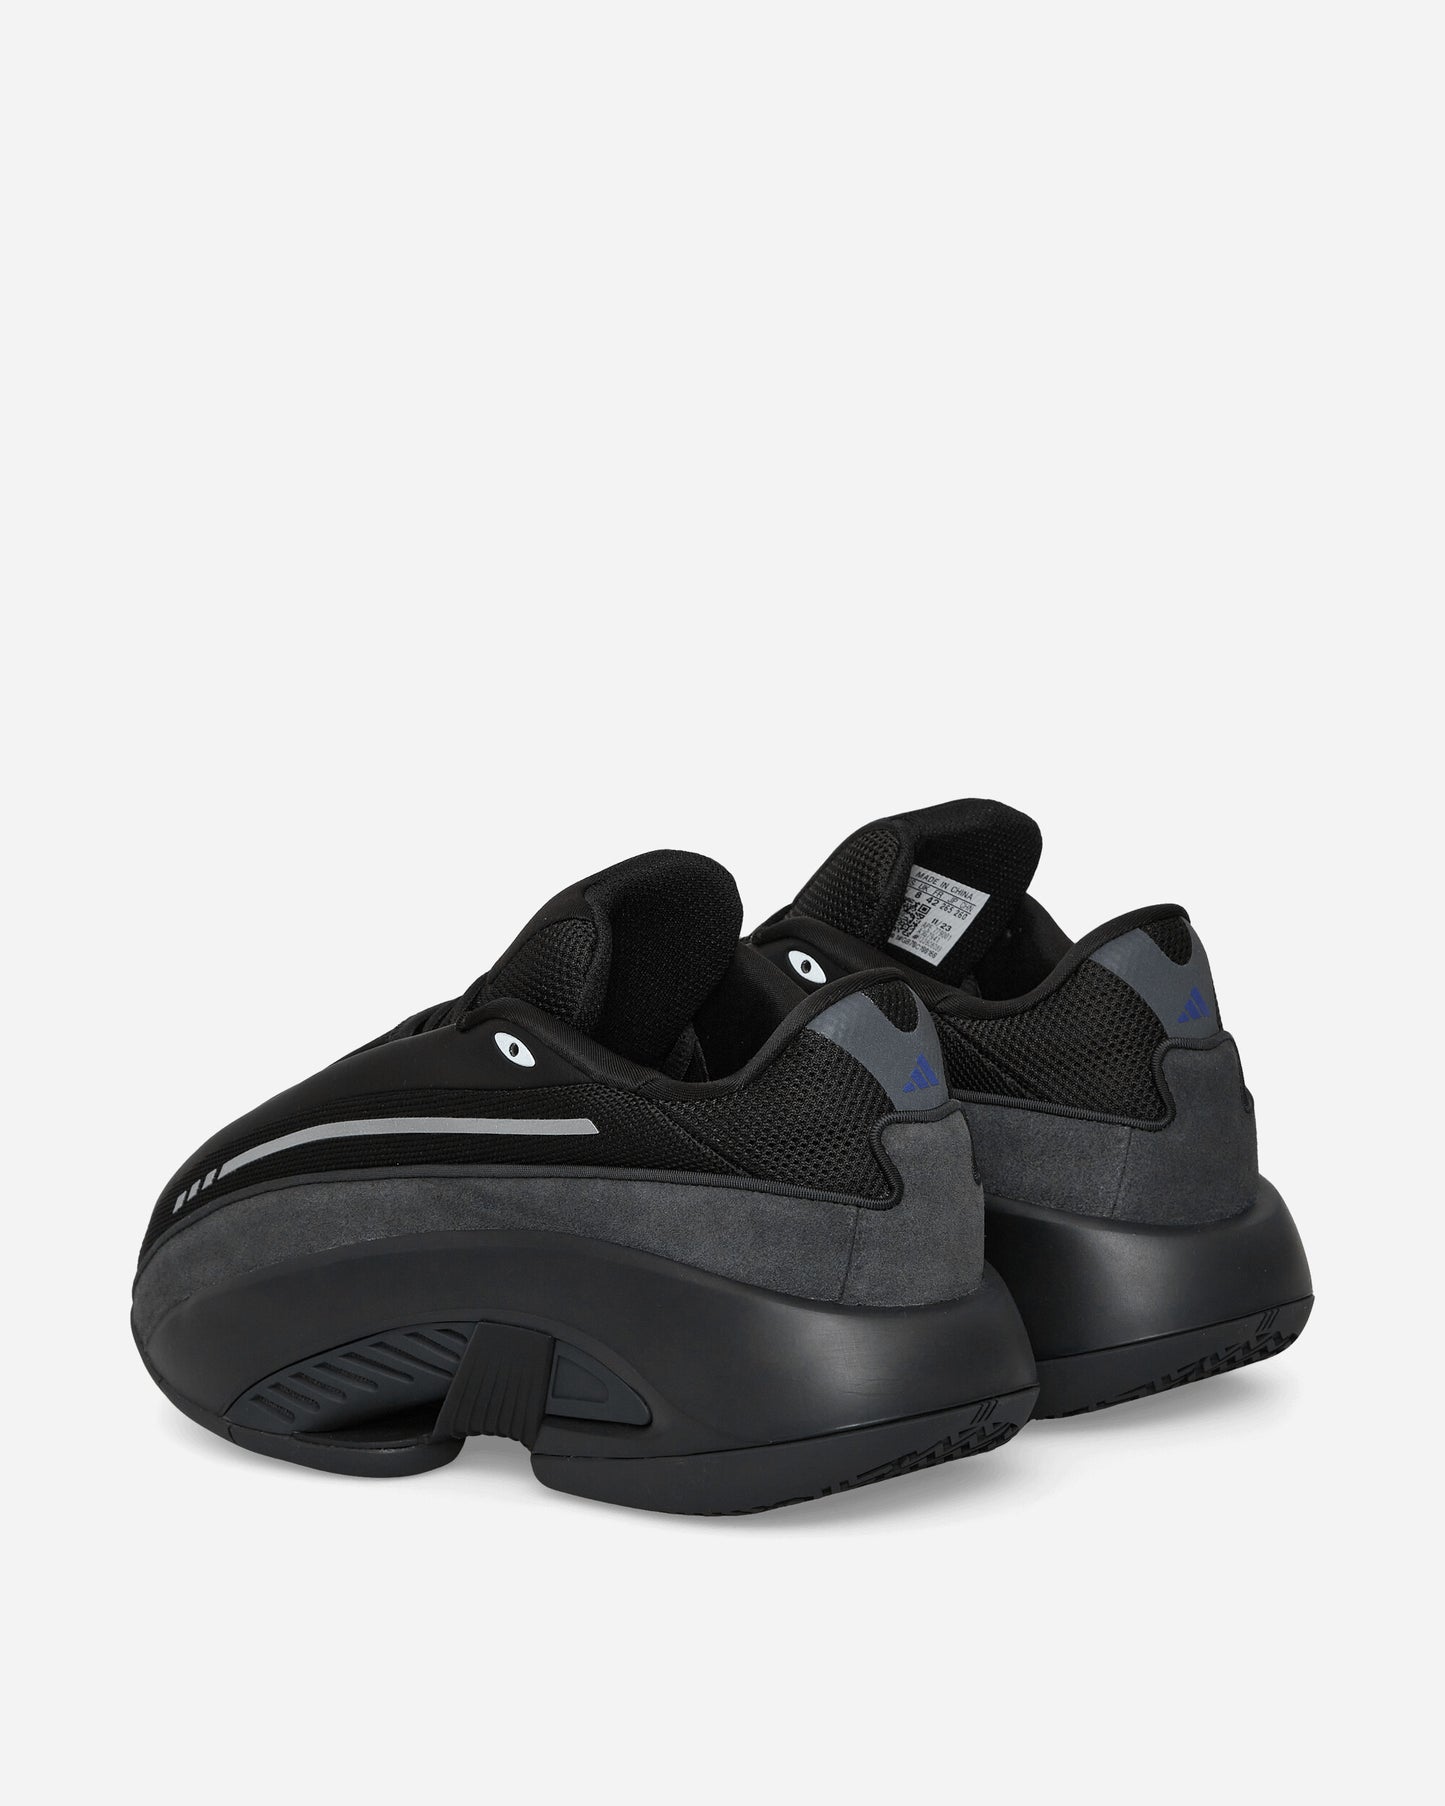 adidas Mad Iiinfinity Core Black/Carbon Sneakers Low IG7941 001